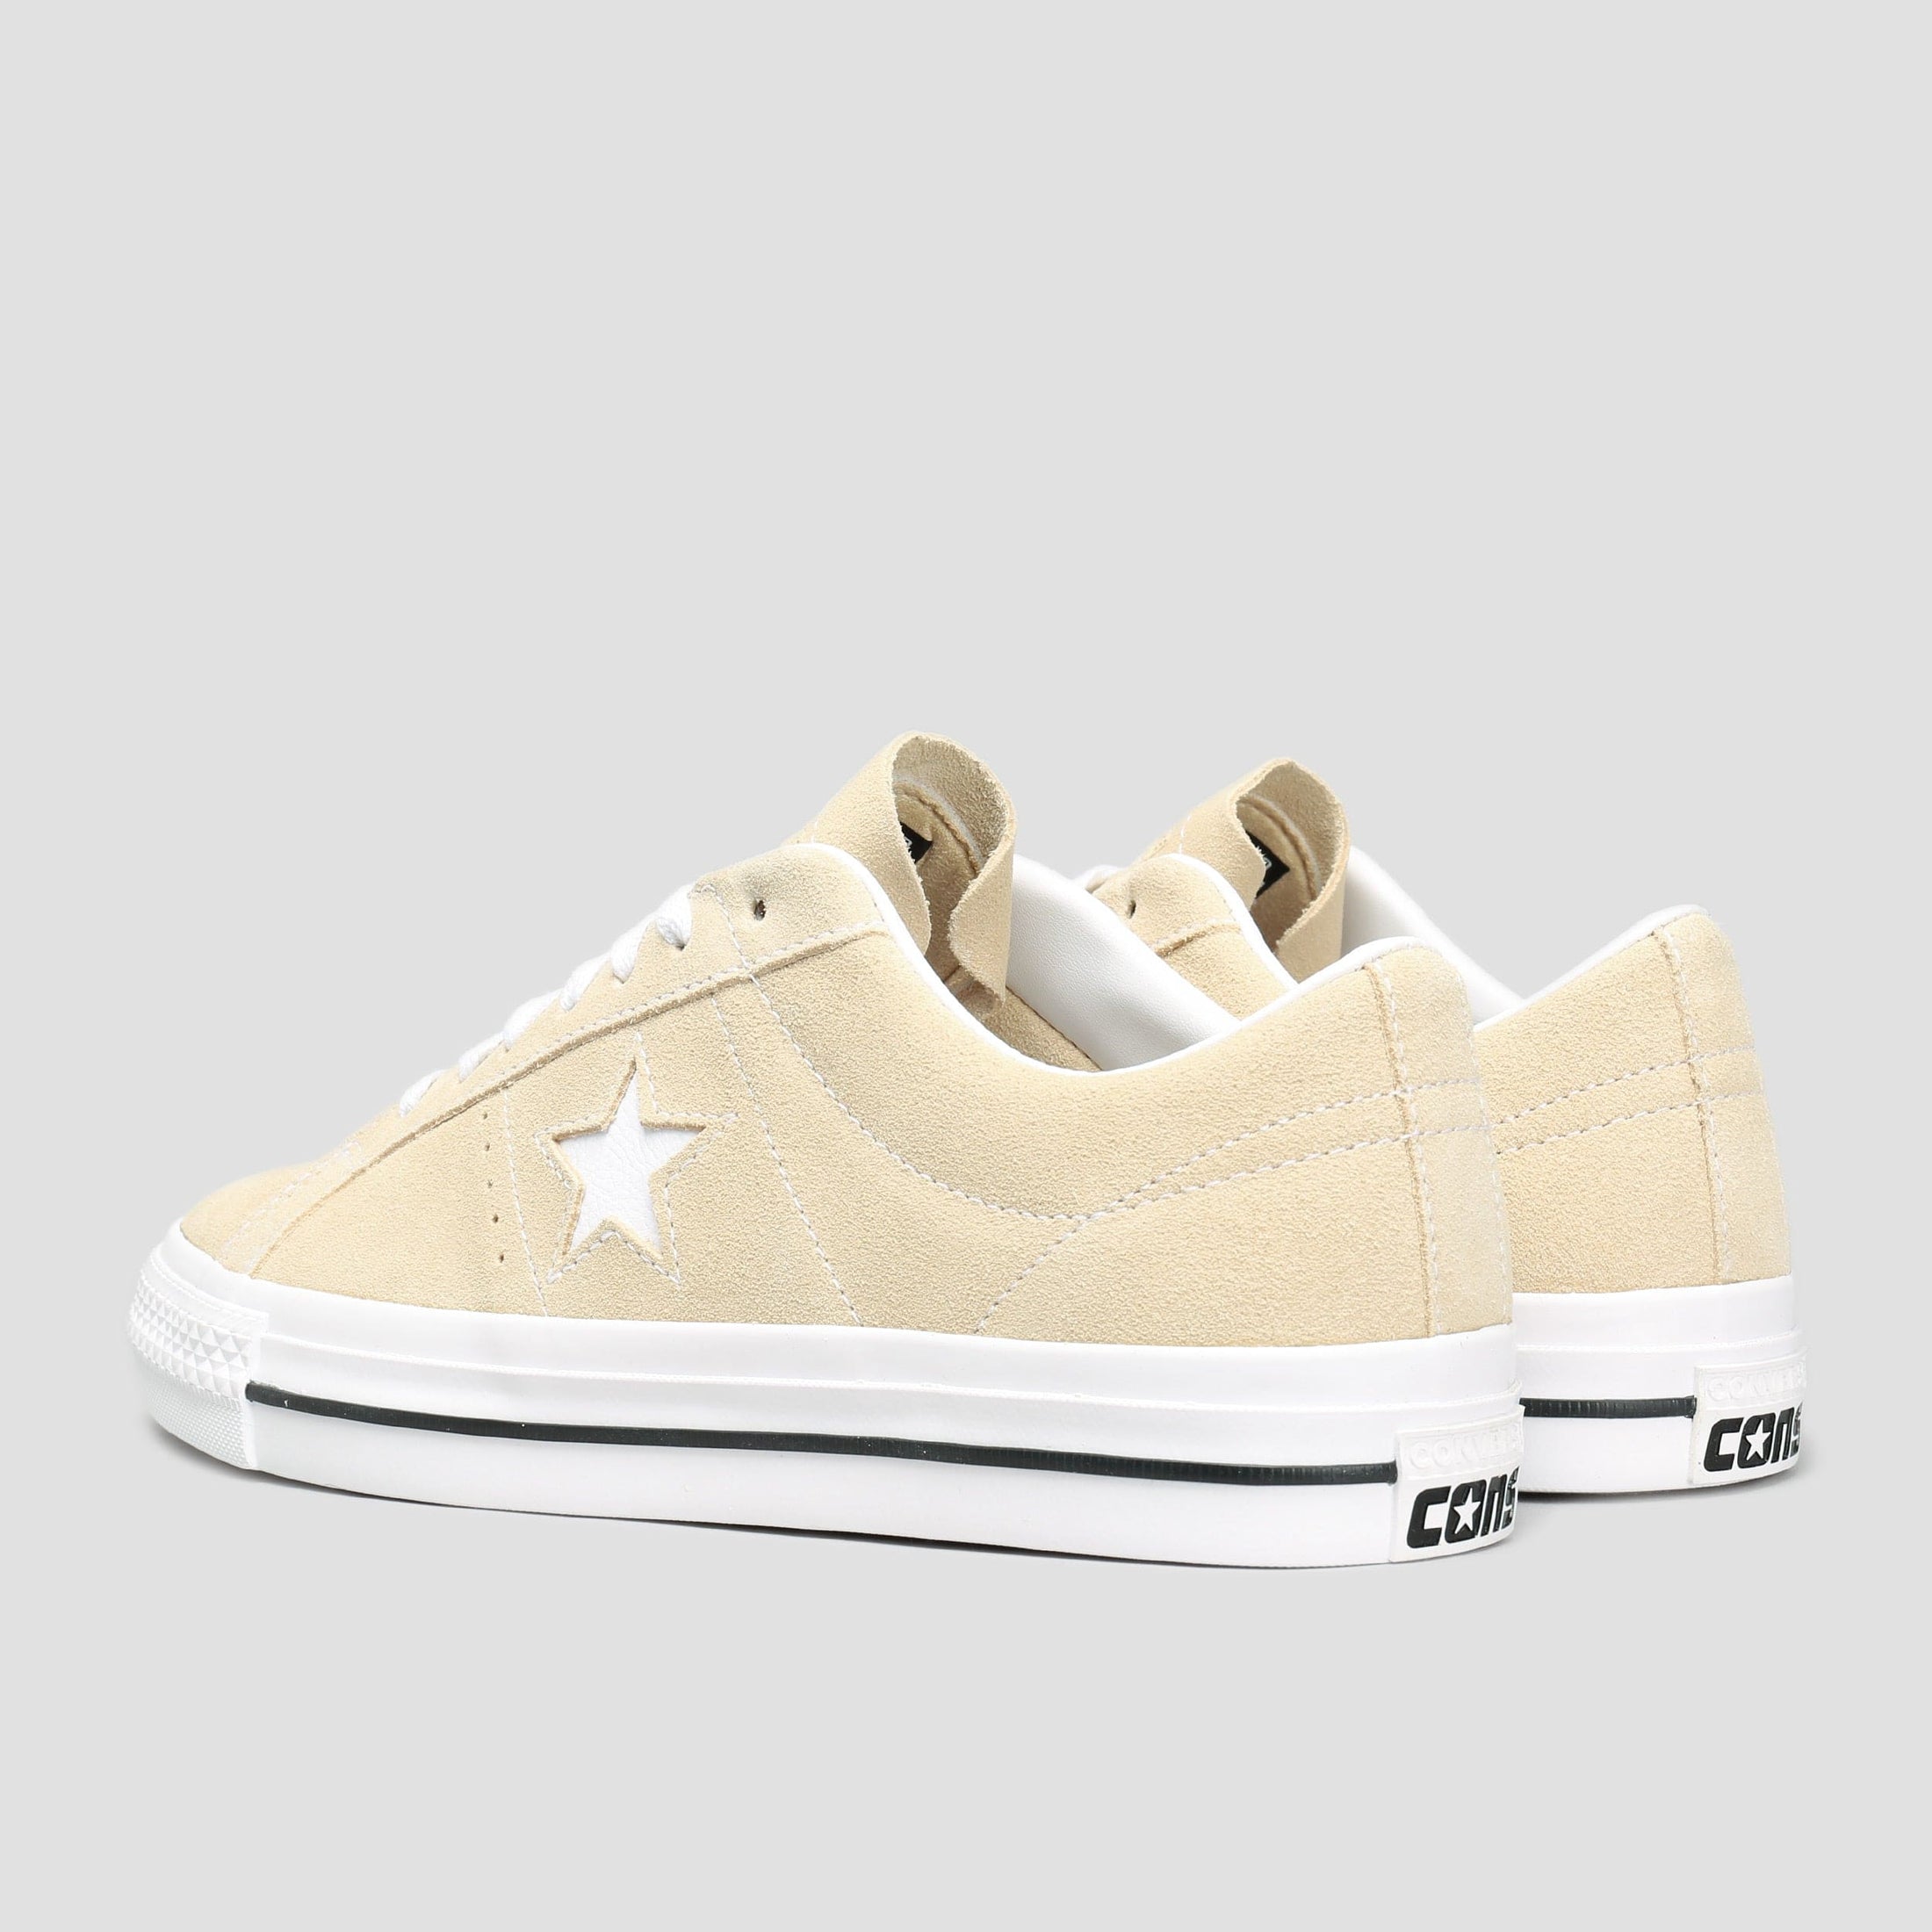 Converse One Star Pro OX Shoes Oat Milk / White / Black